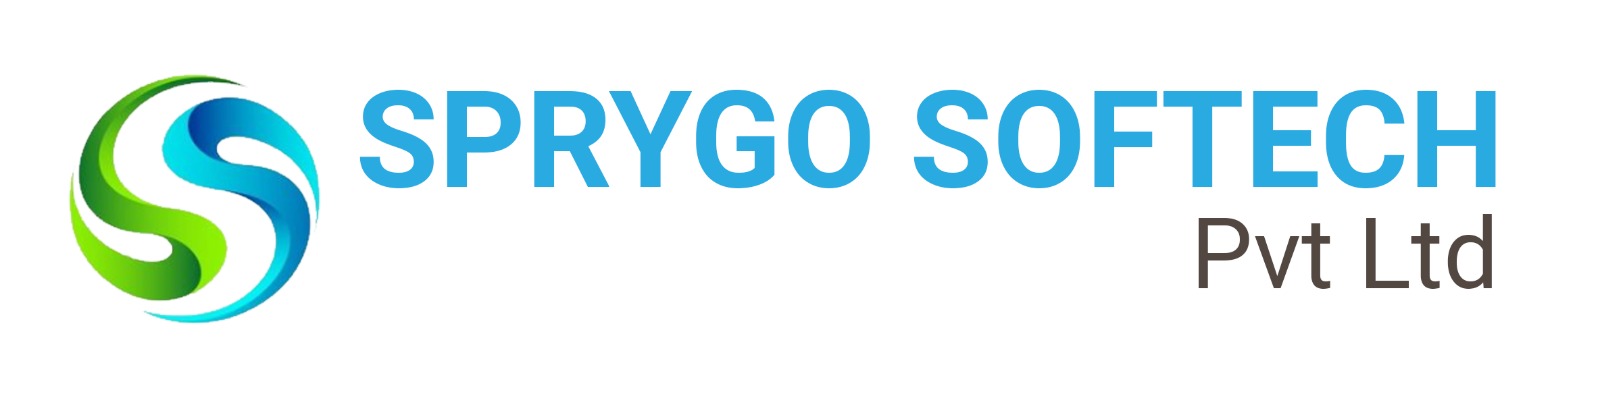 Sprygo Softech Pvt Ltd